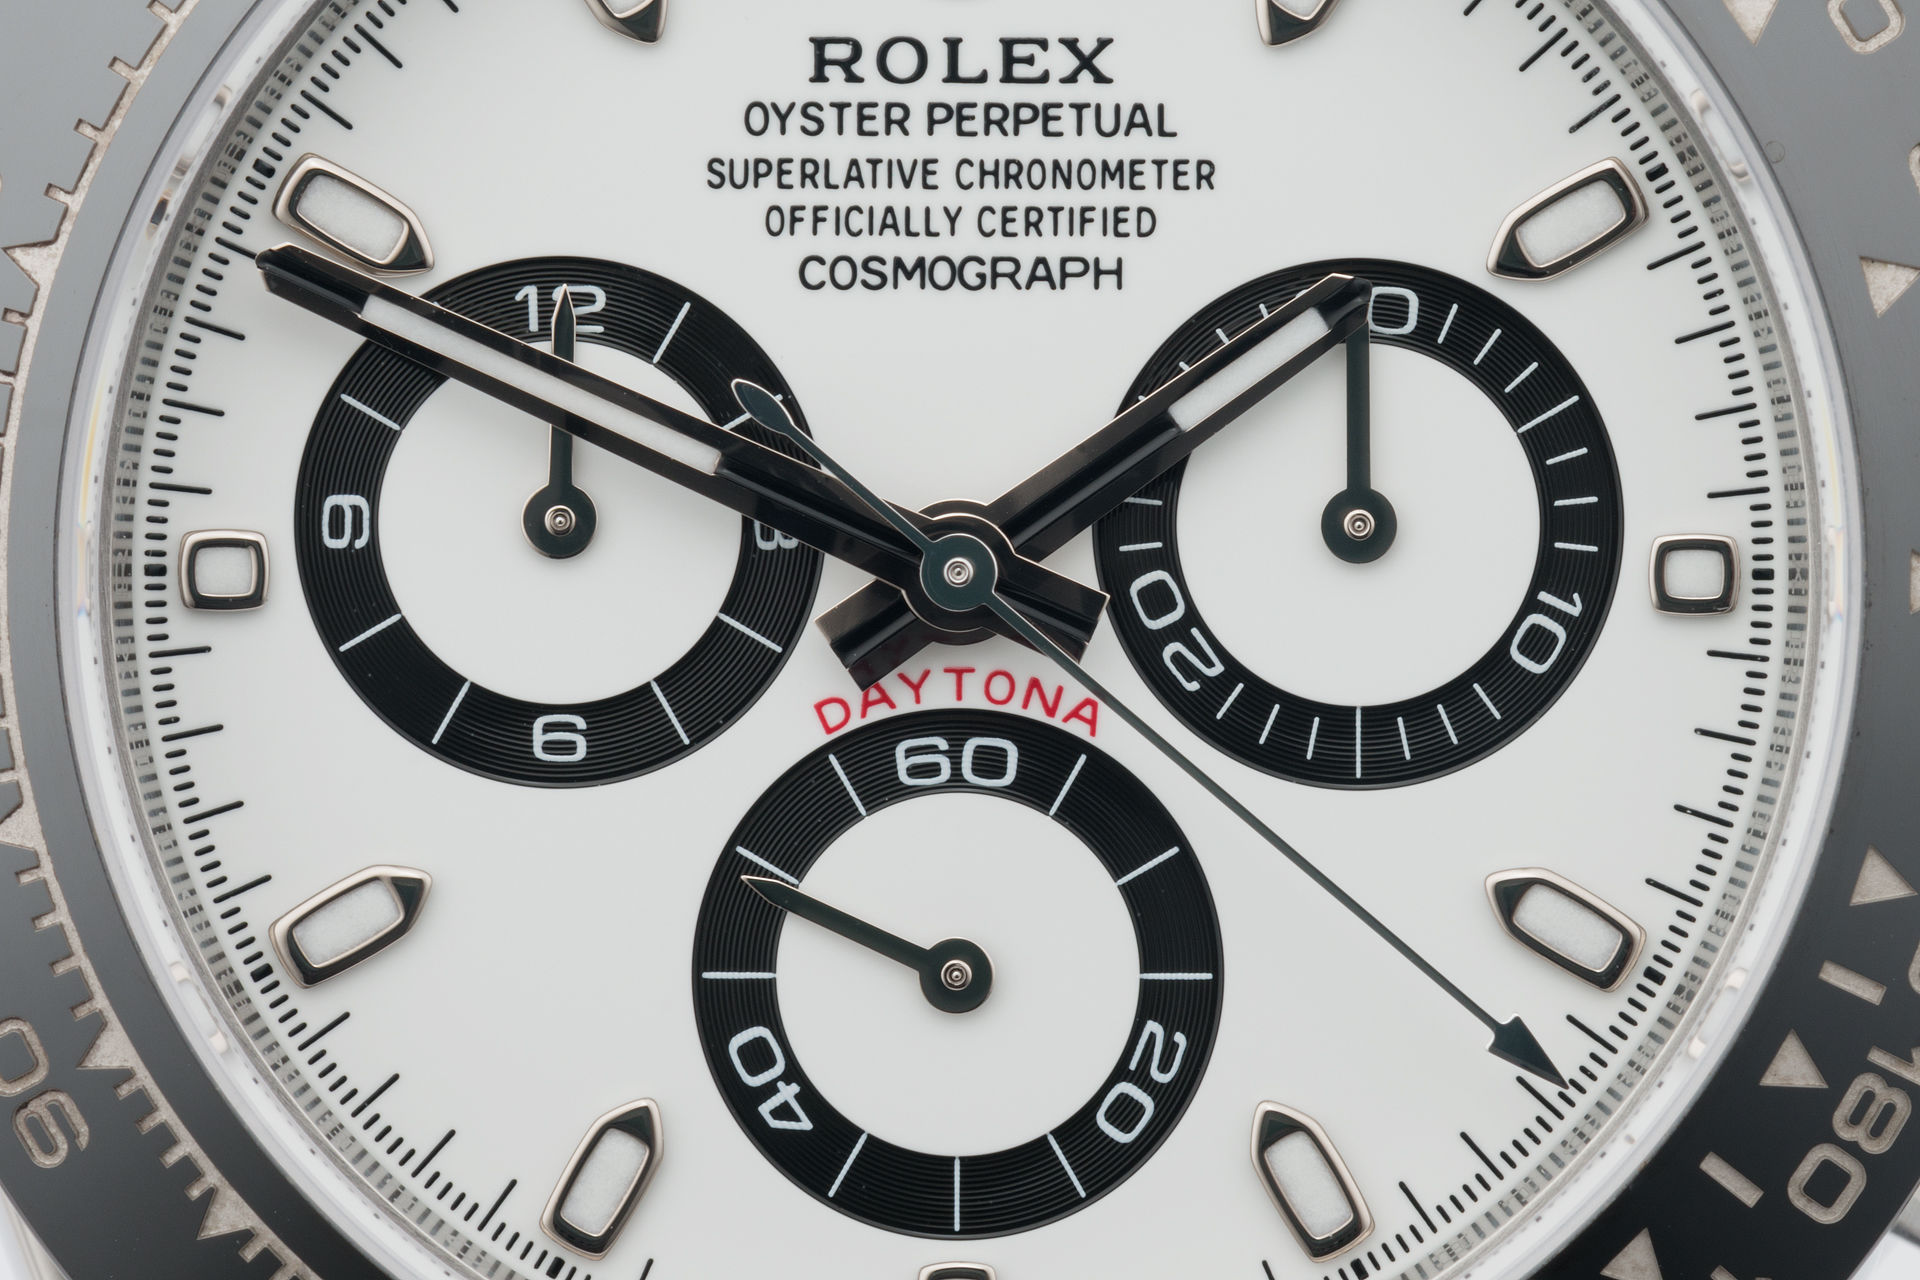 ref 116500LN | Latest Cerachrom Model | Rolex Cosmograph Daytona